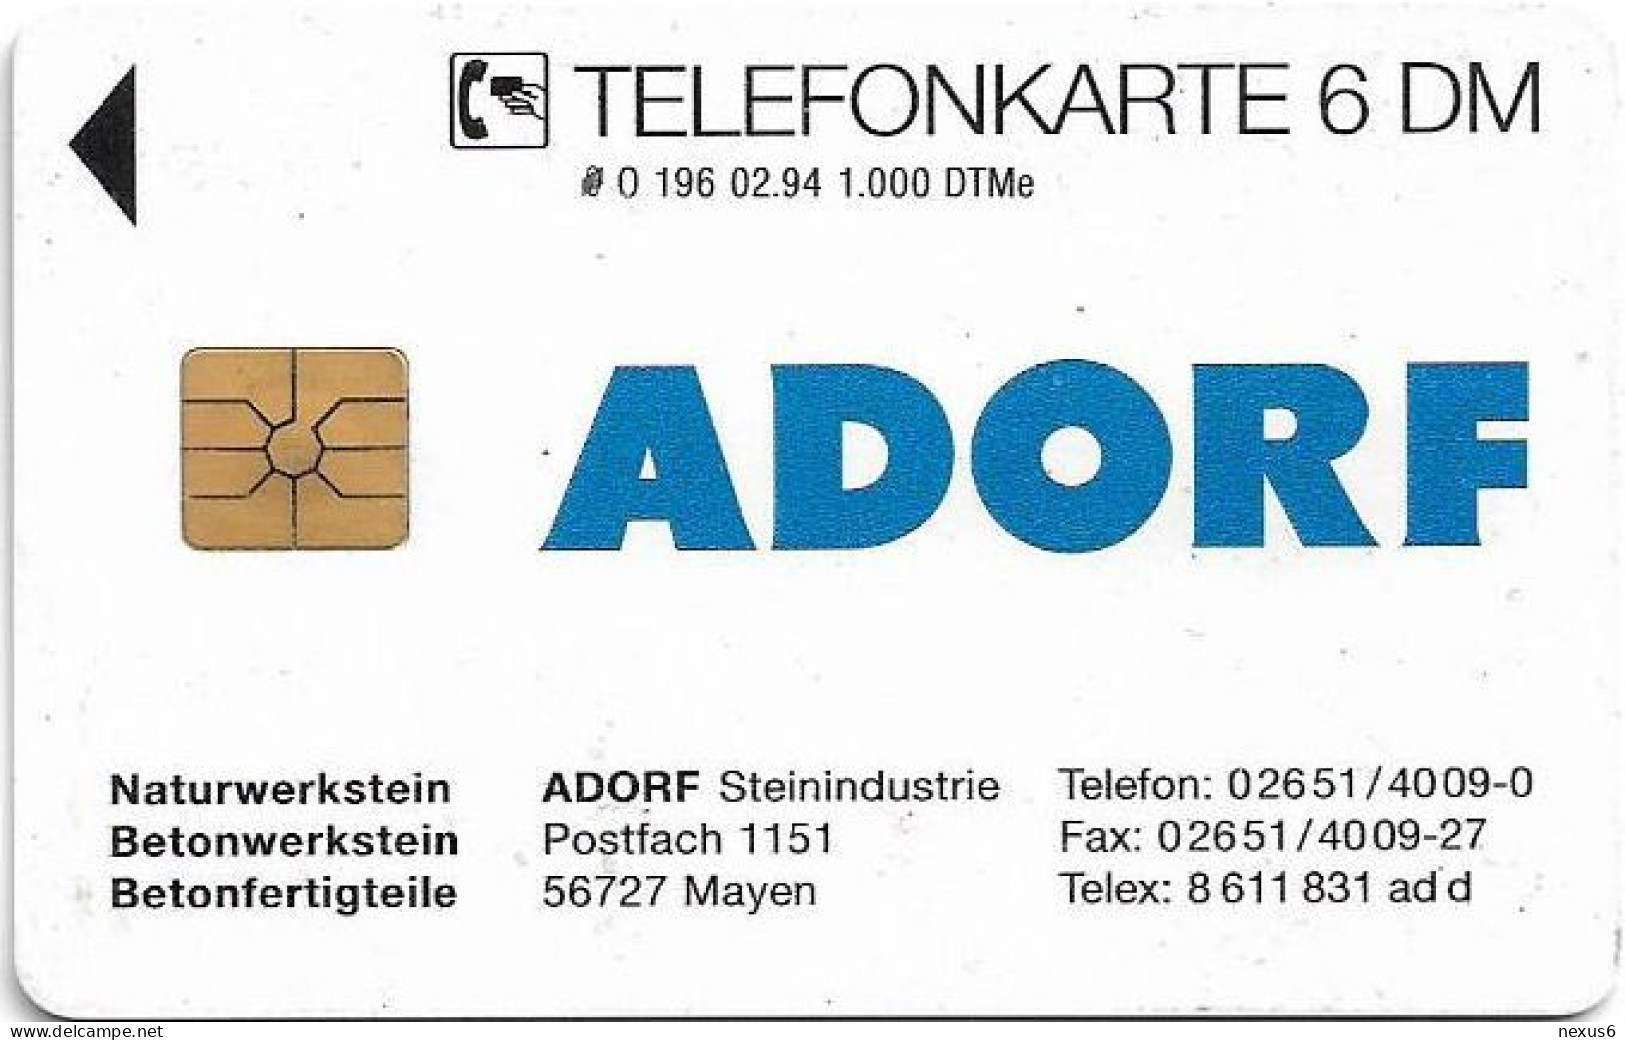 Germany - Adorf - Fassadentechnik - O 0196 - 02.1994, 6DM, 1.000ex, Used - O-Series: Kundenserie Vom Sammlerservice Ausgeschlossen